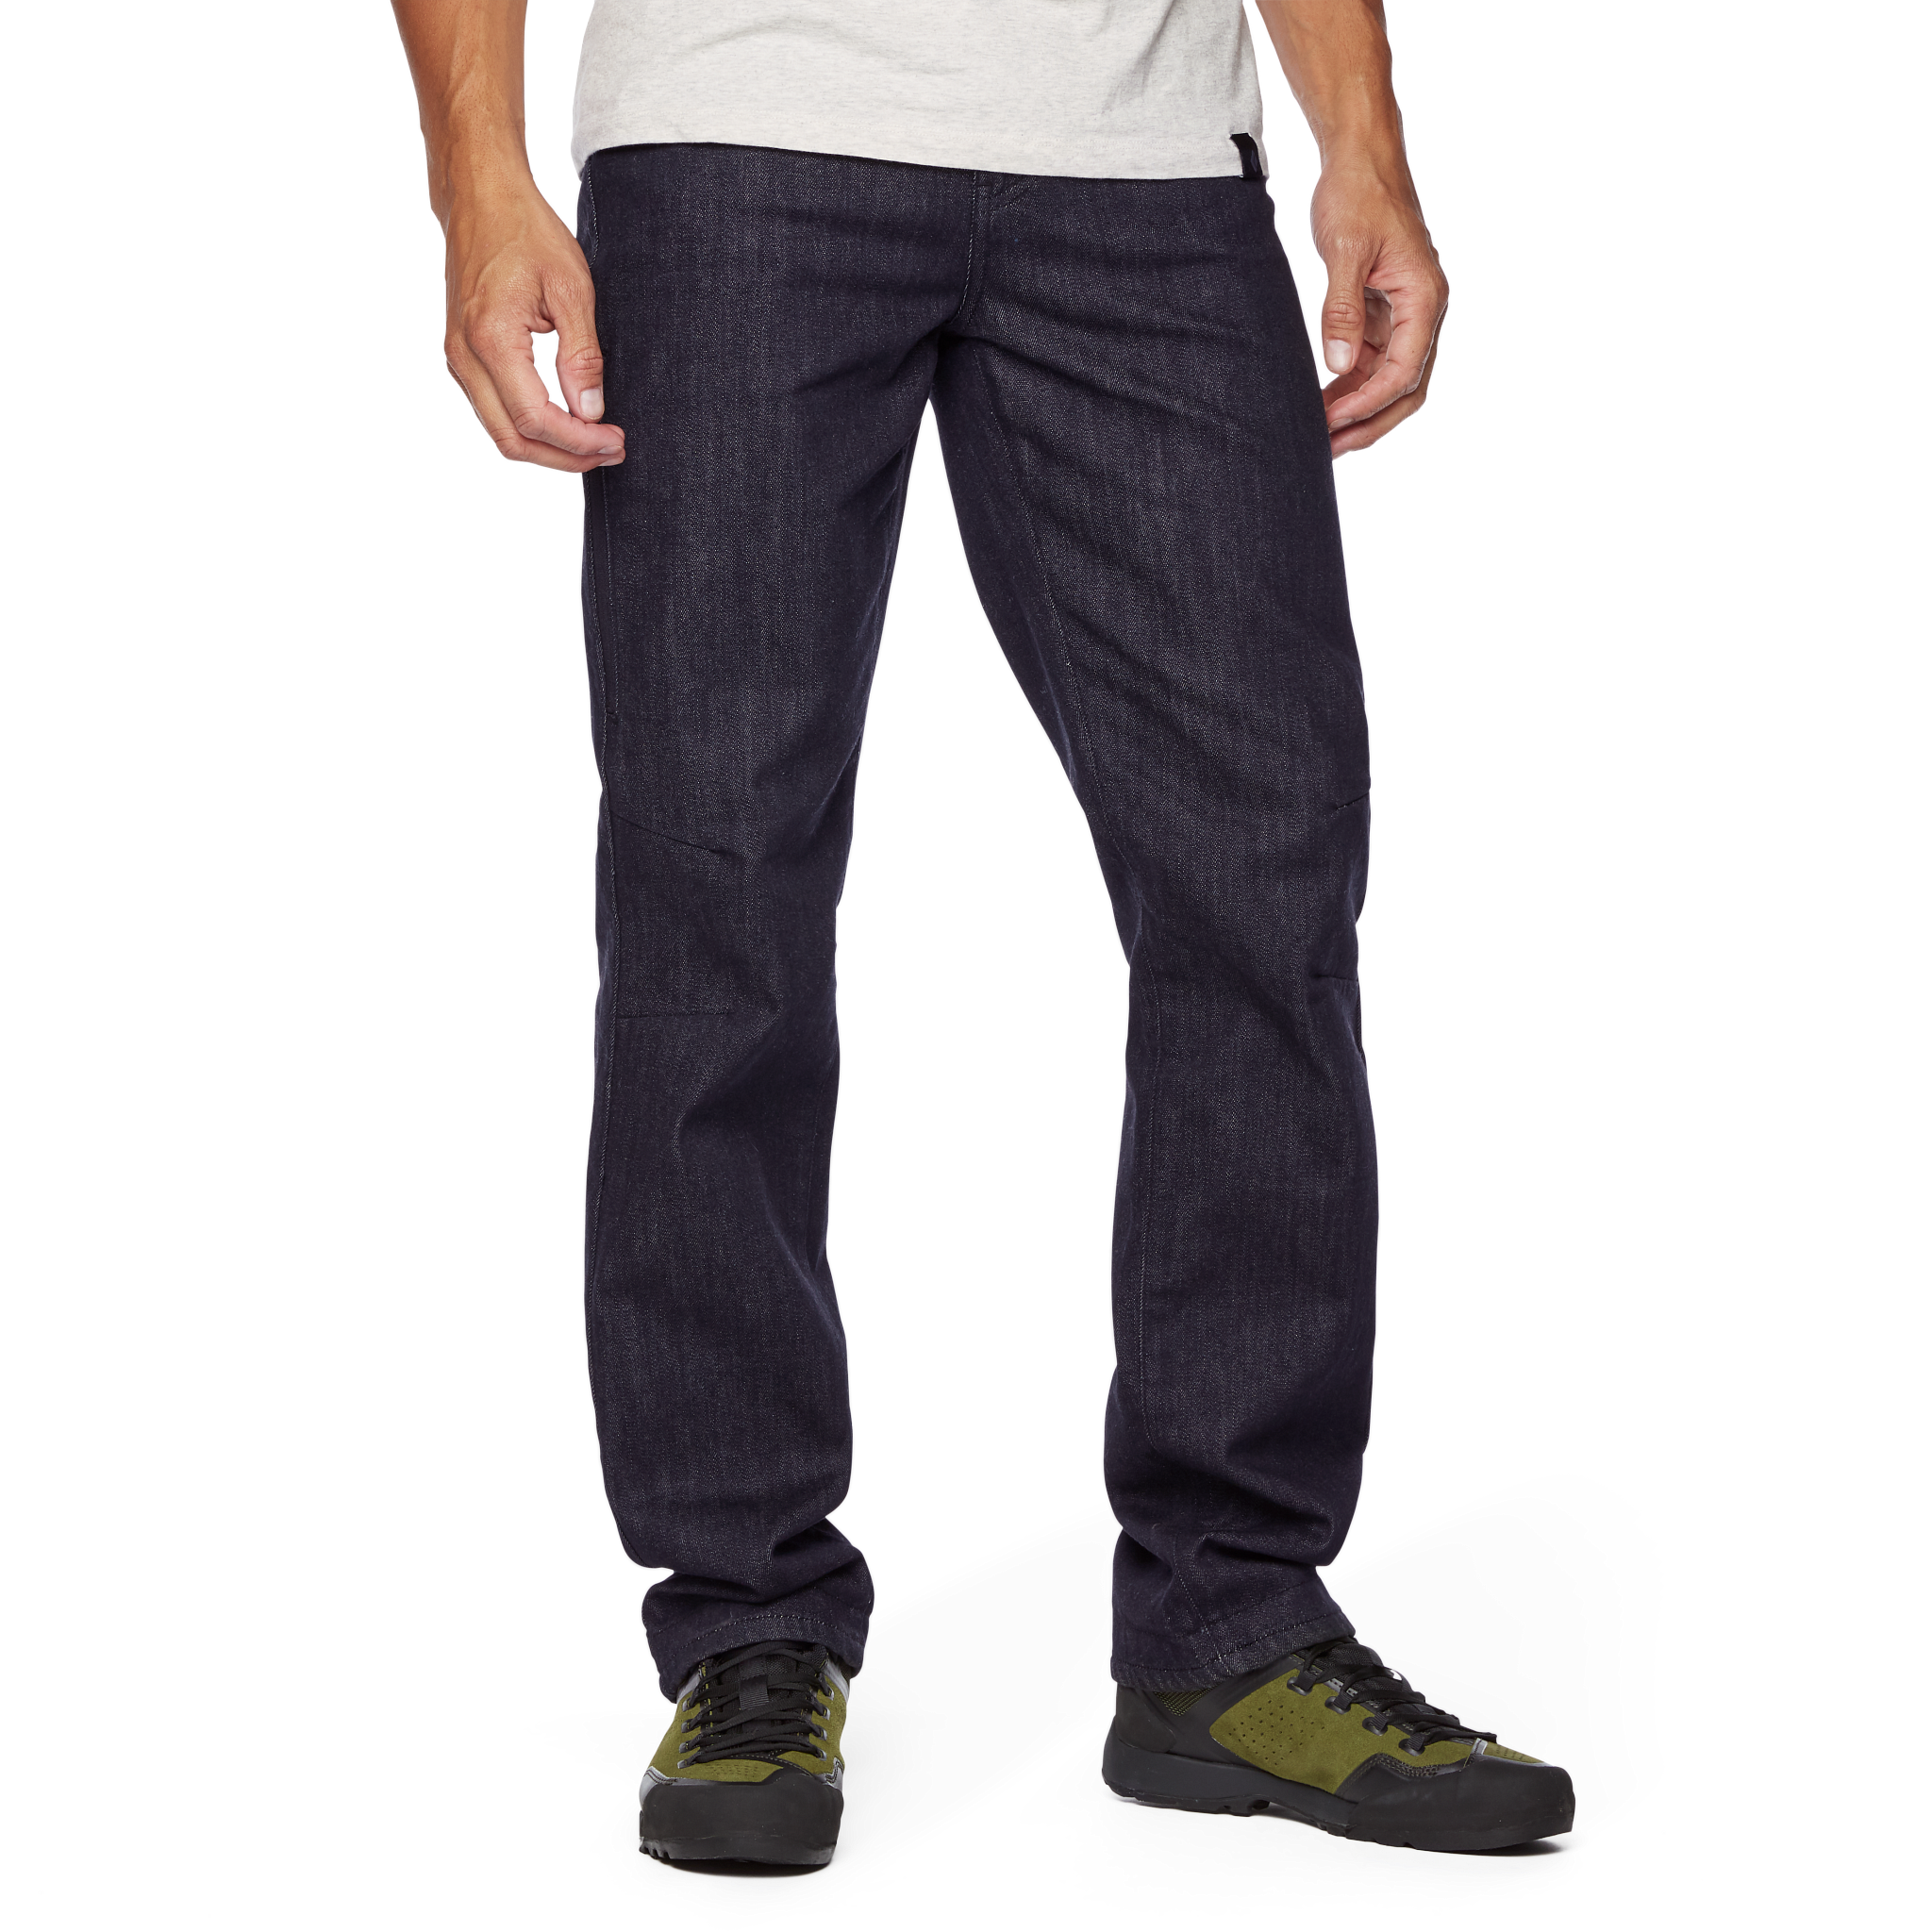 Black Diamond Equipment Men's Mission Wool Denim Pants Size 36, in Dark Grey